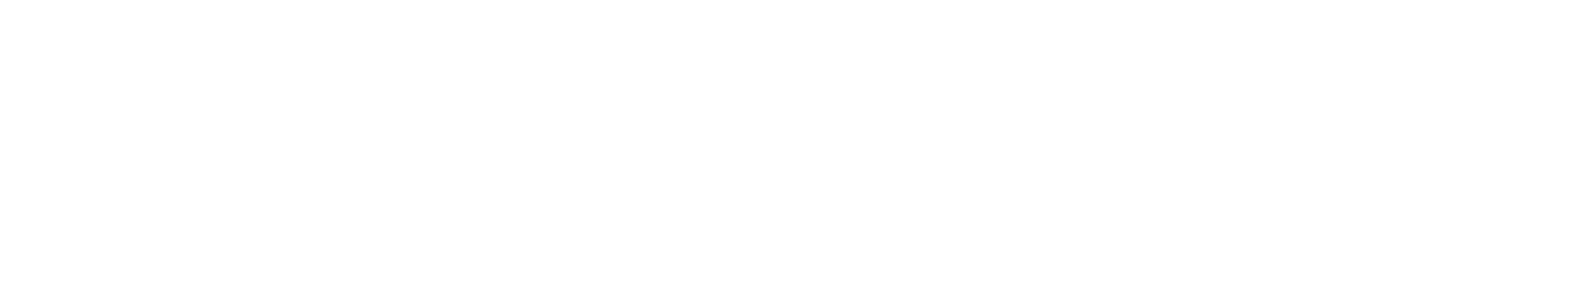 Phunware logo large for dark backgrounds (transparent PNG)